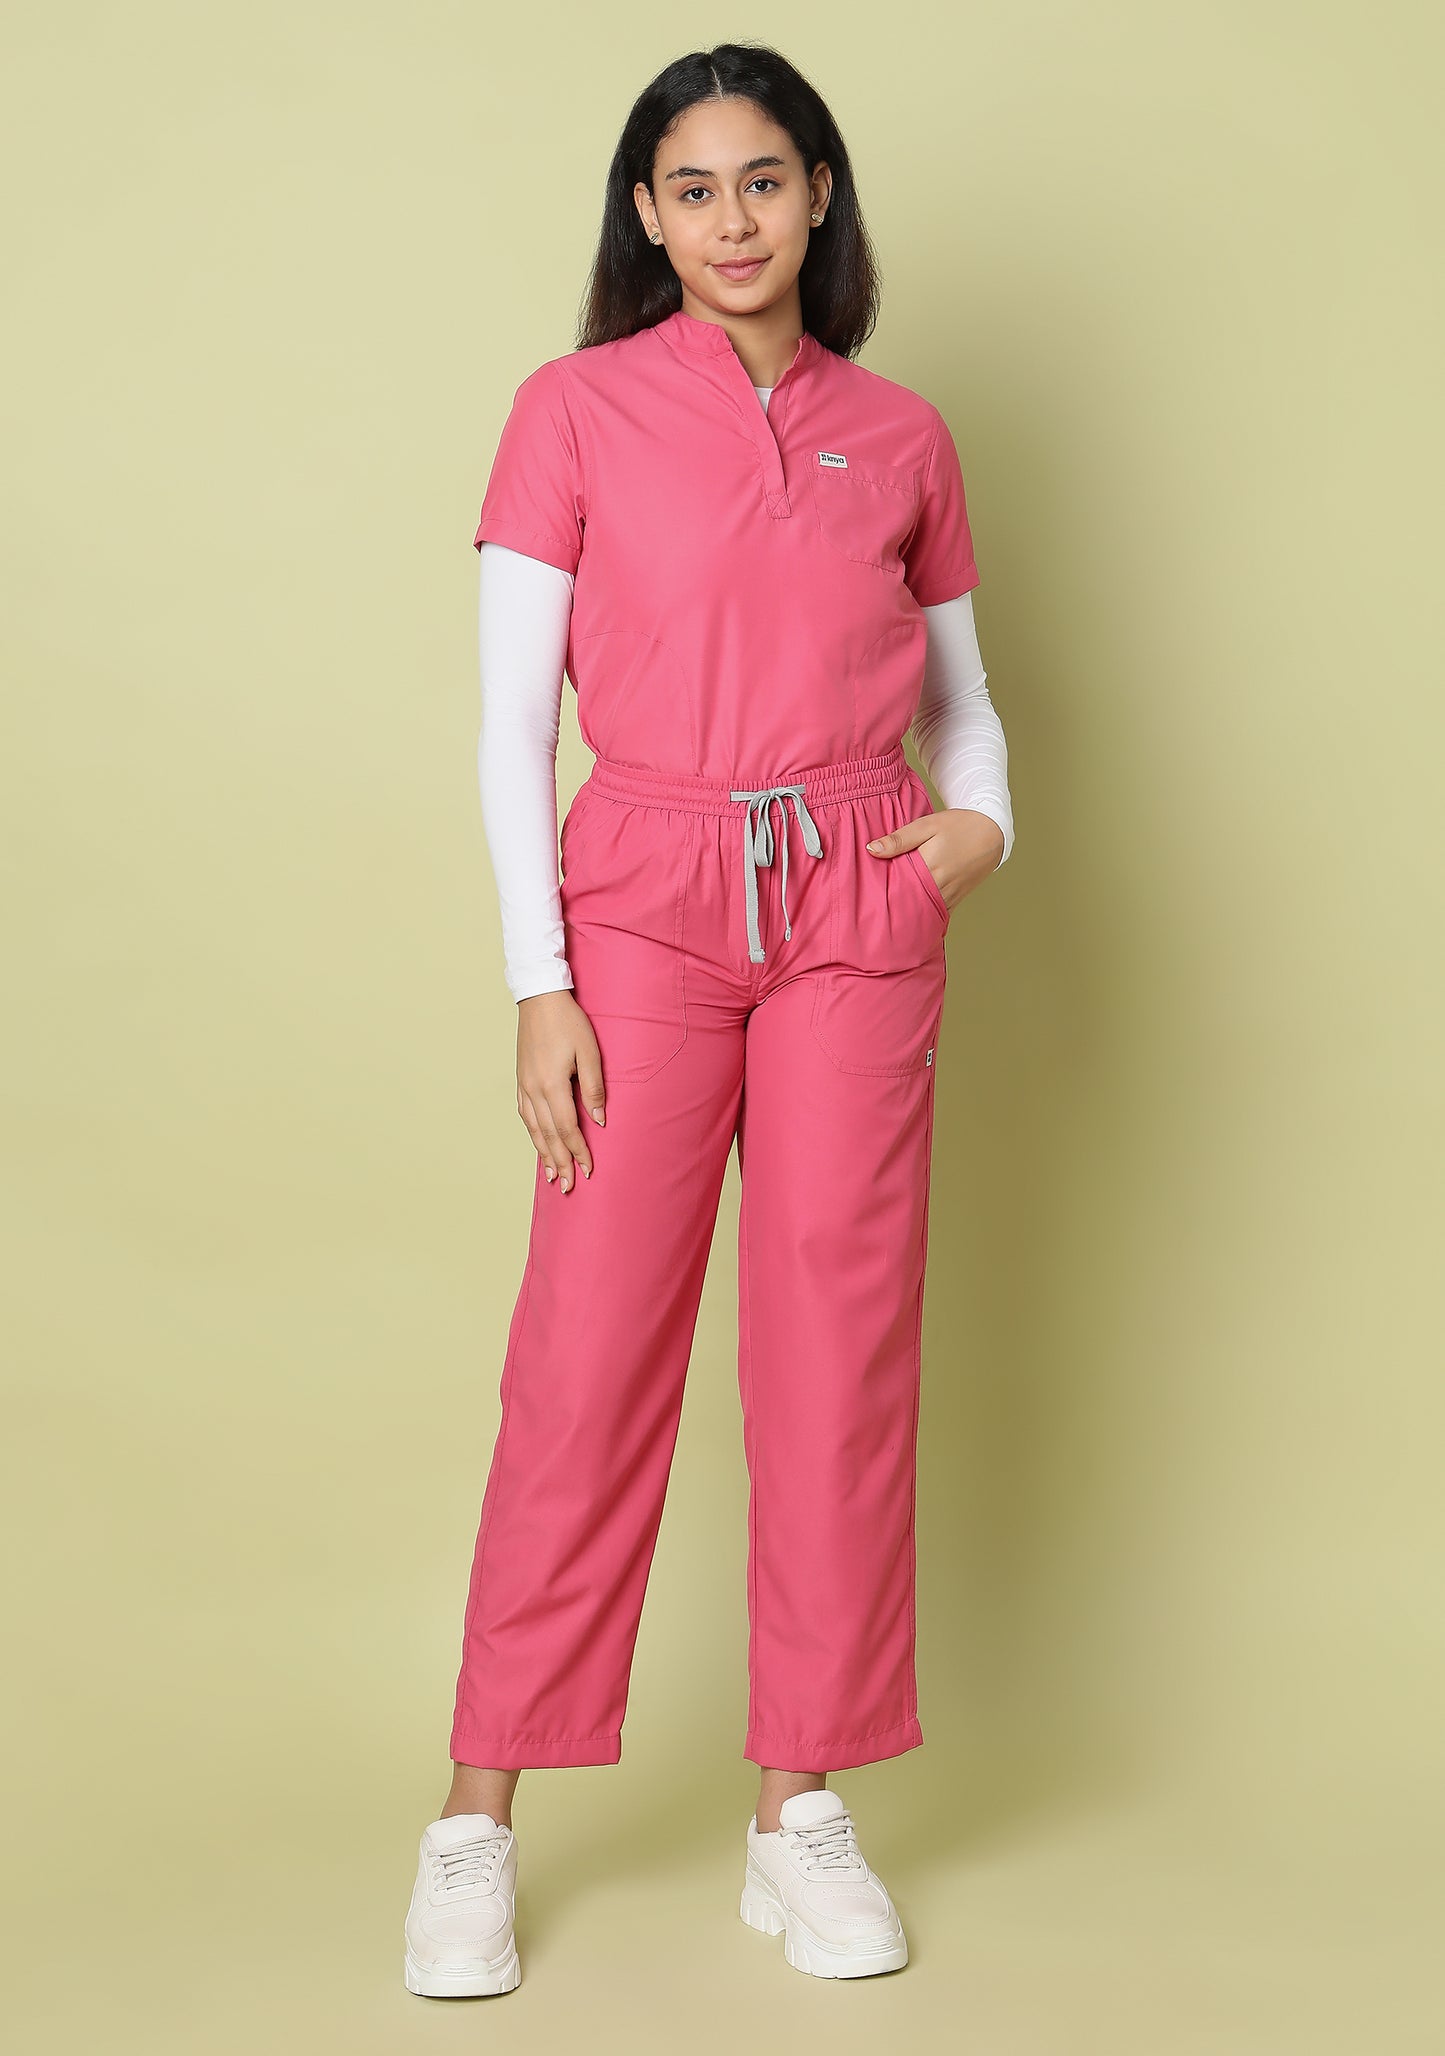 Classic Women's 5-Pocket Mandarin Collar (Hot Pink) Scrub